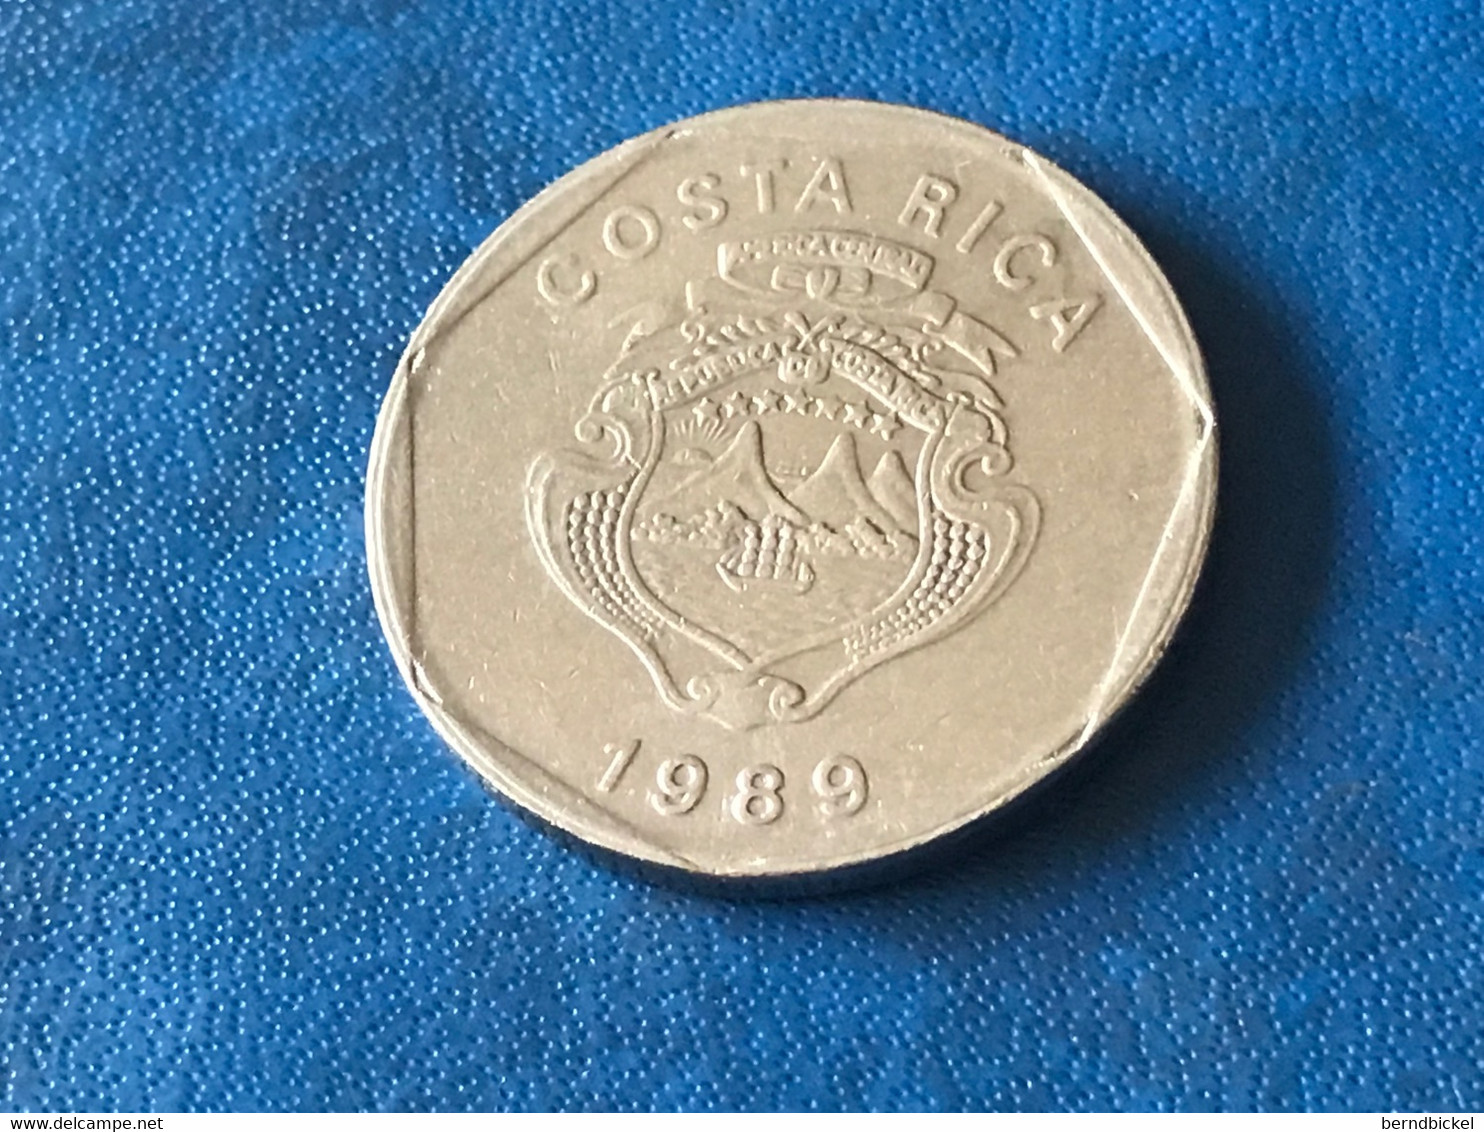 Münze Münzen Umlaufmünze Costa Rica 5 Colones 1989 - Costa Rica